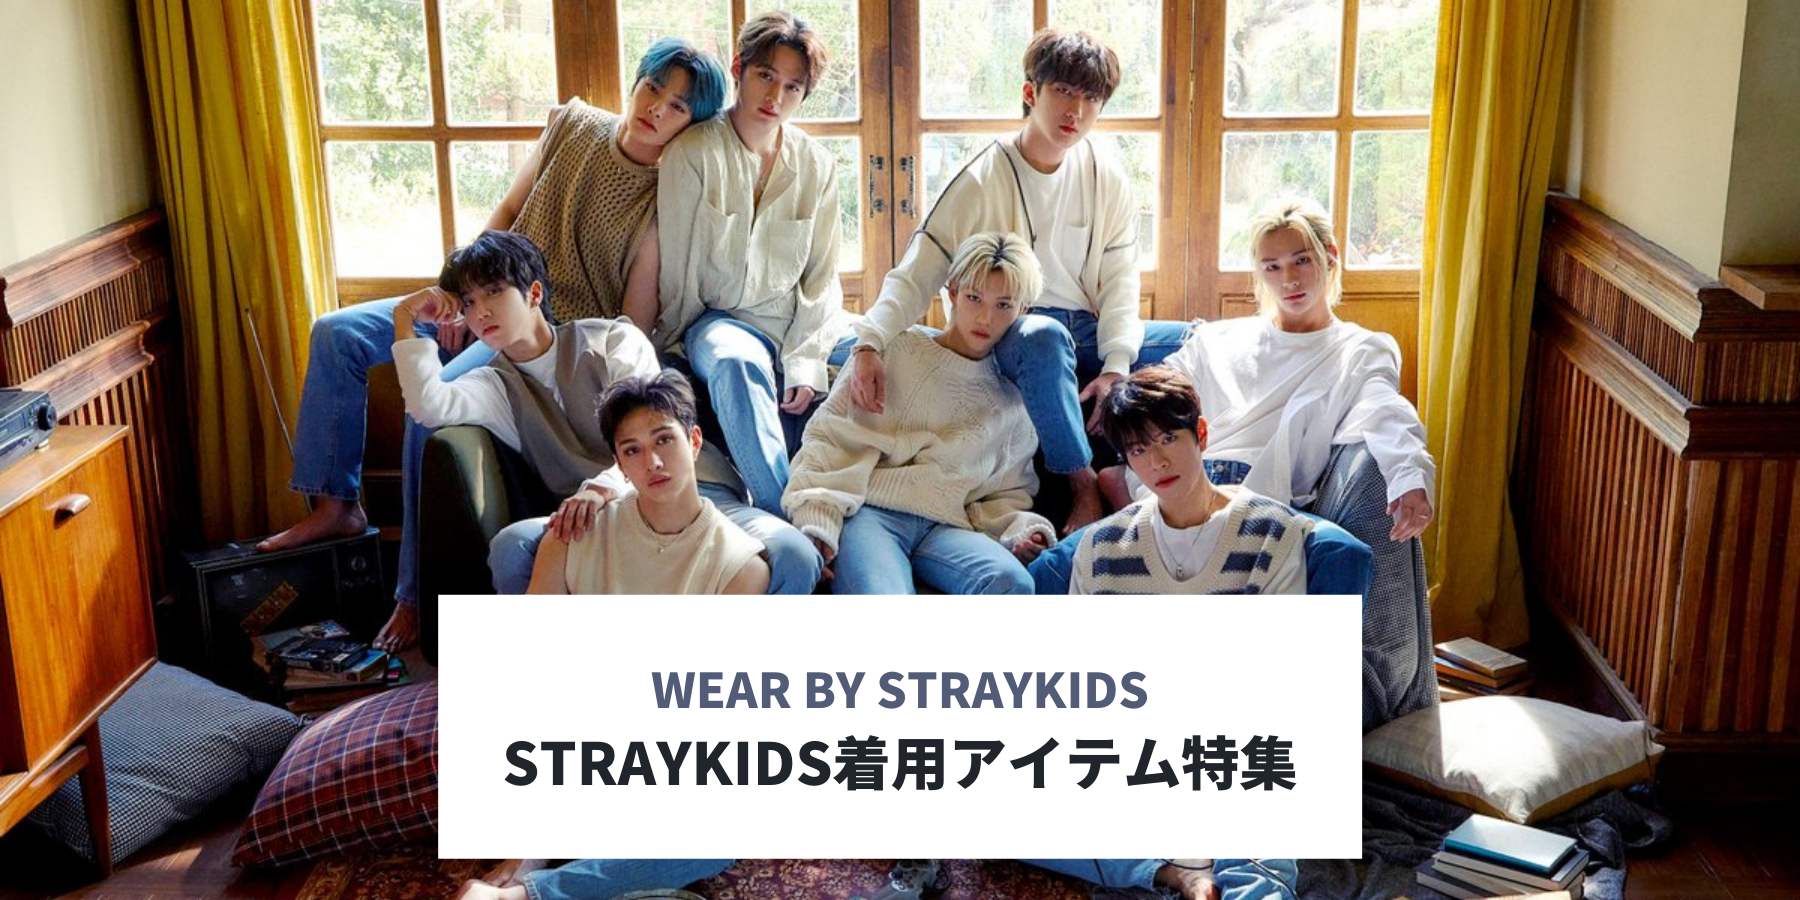 straykids着用アイテム特集 - アジアのファッション通販サイト「60 